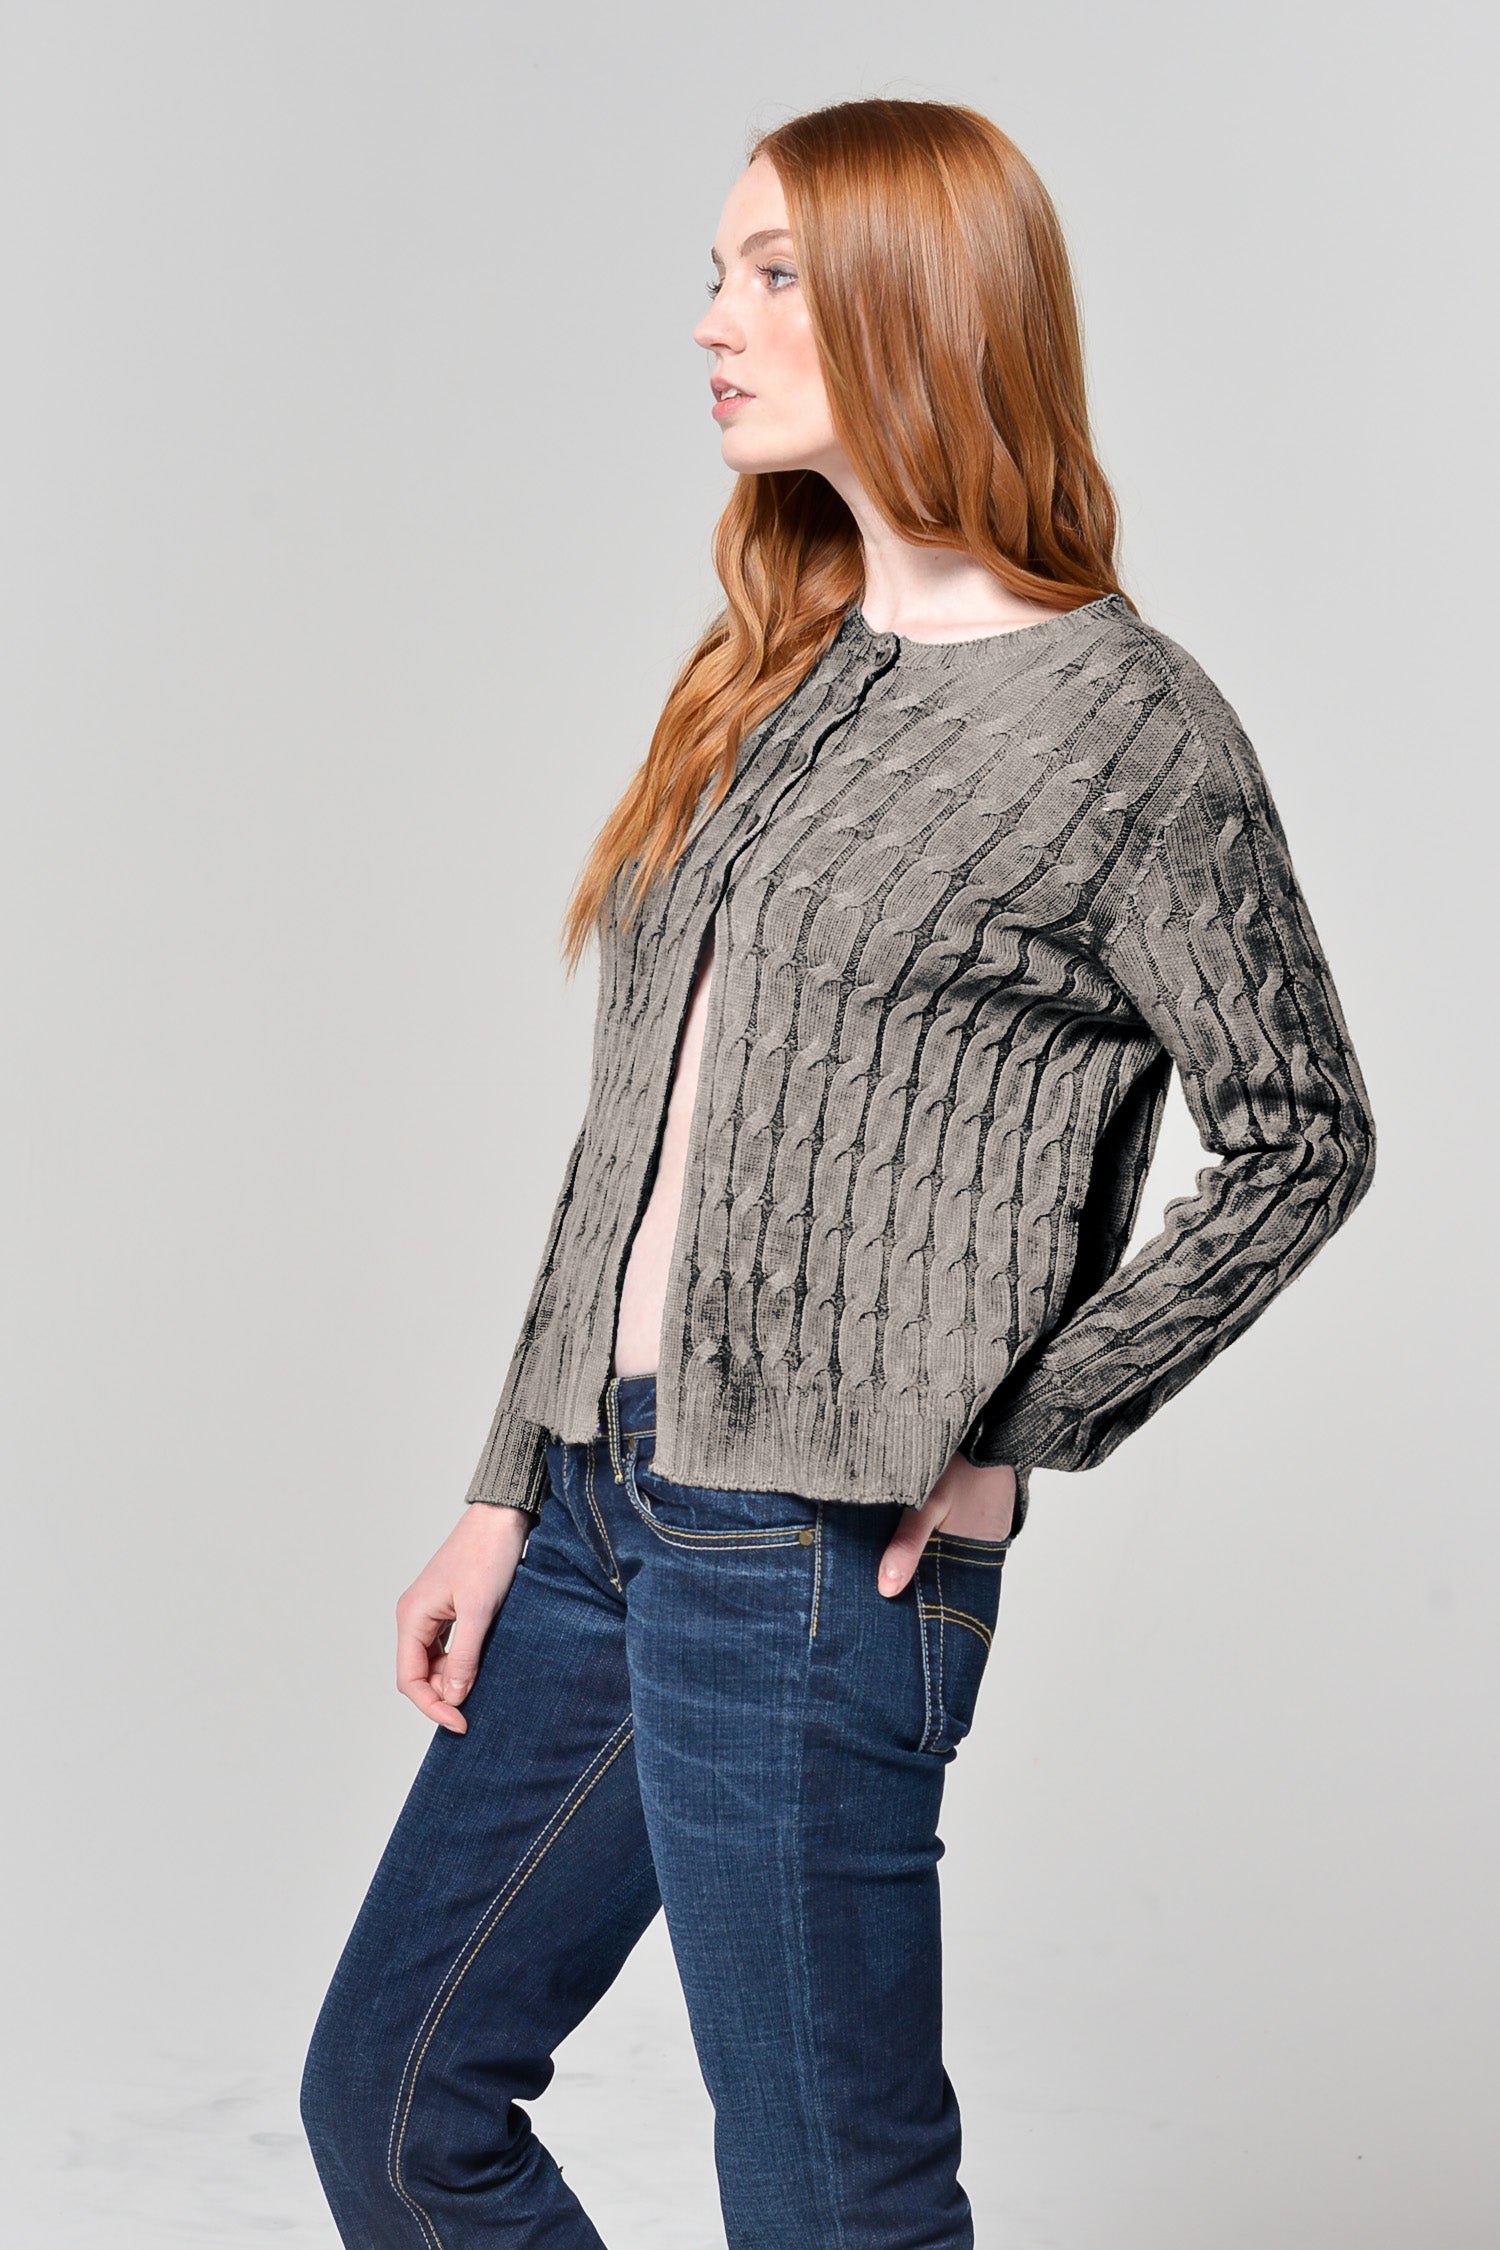 Dores Rock Art Sweater - Migma